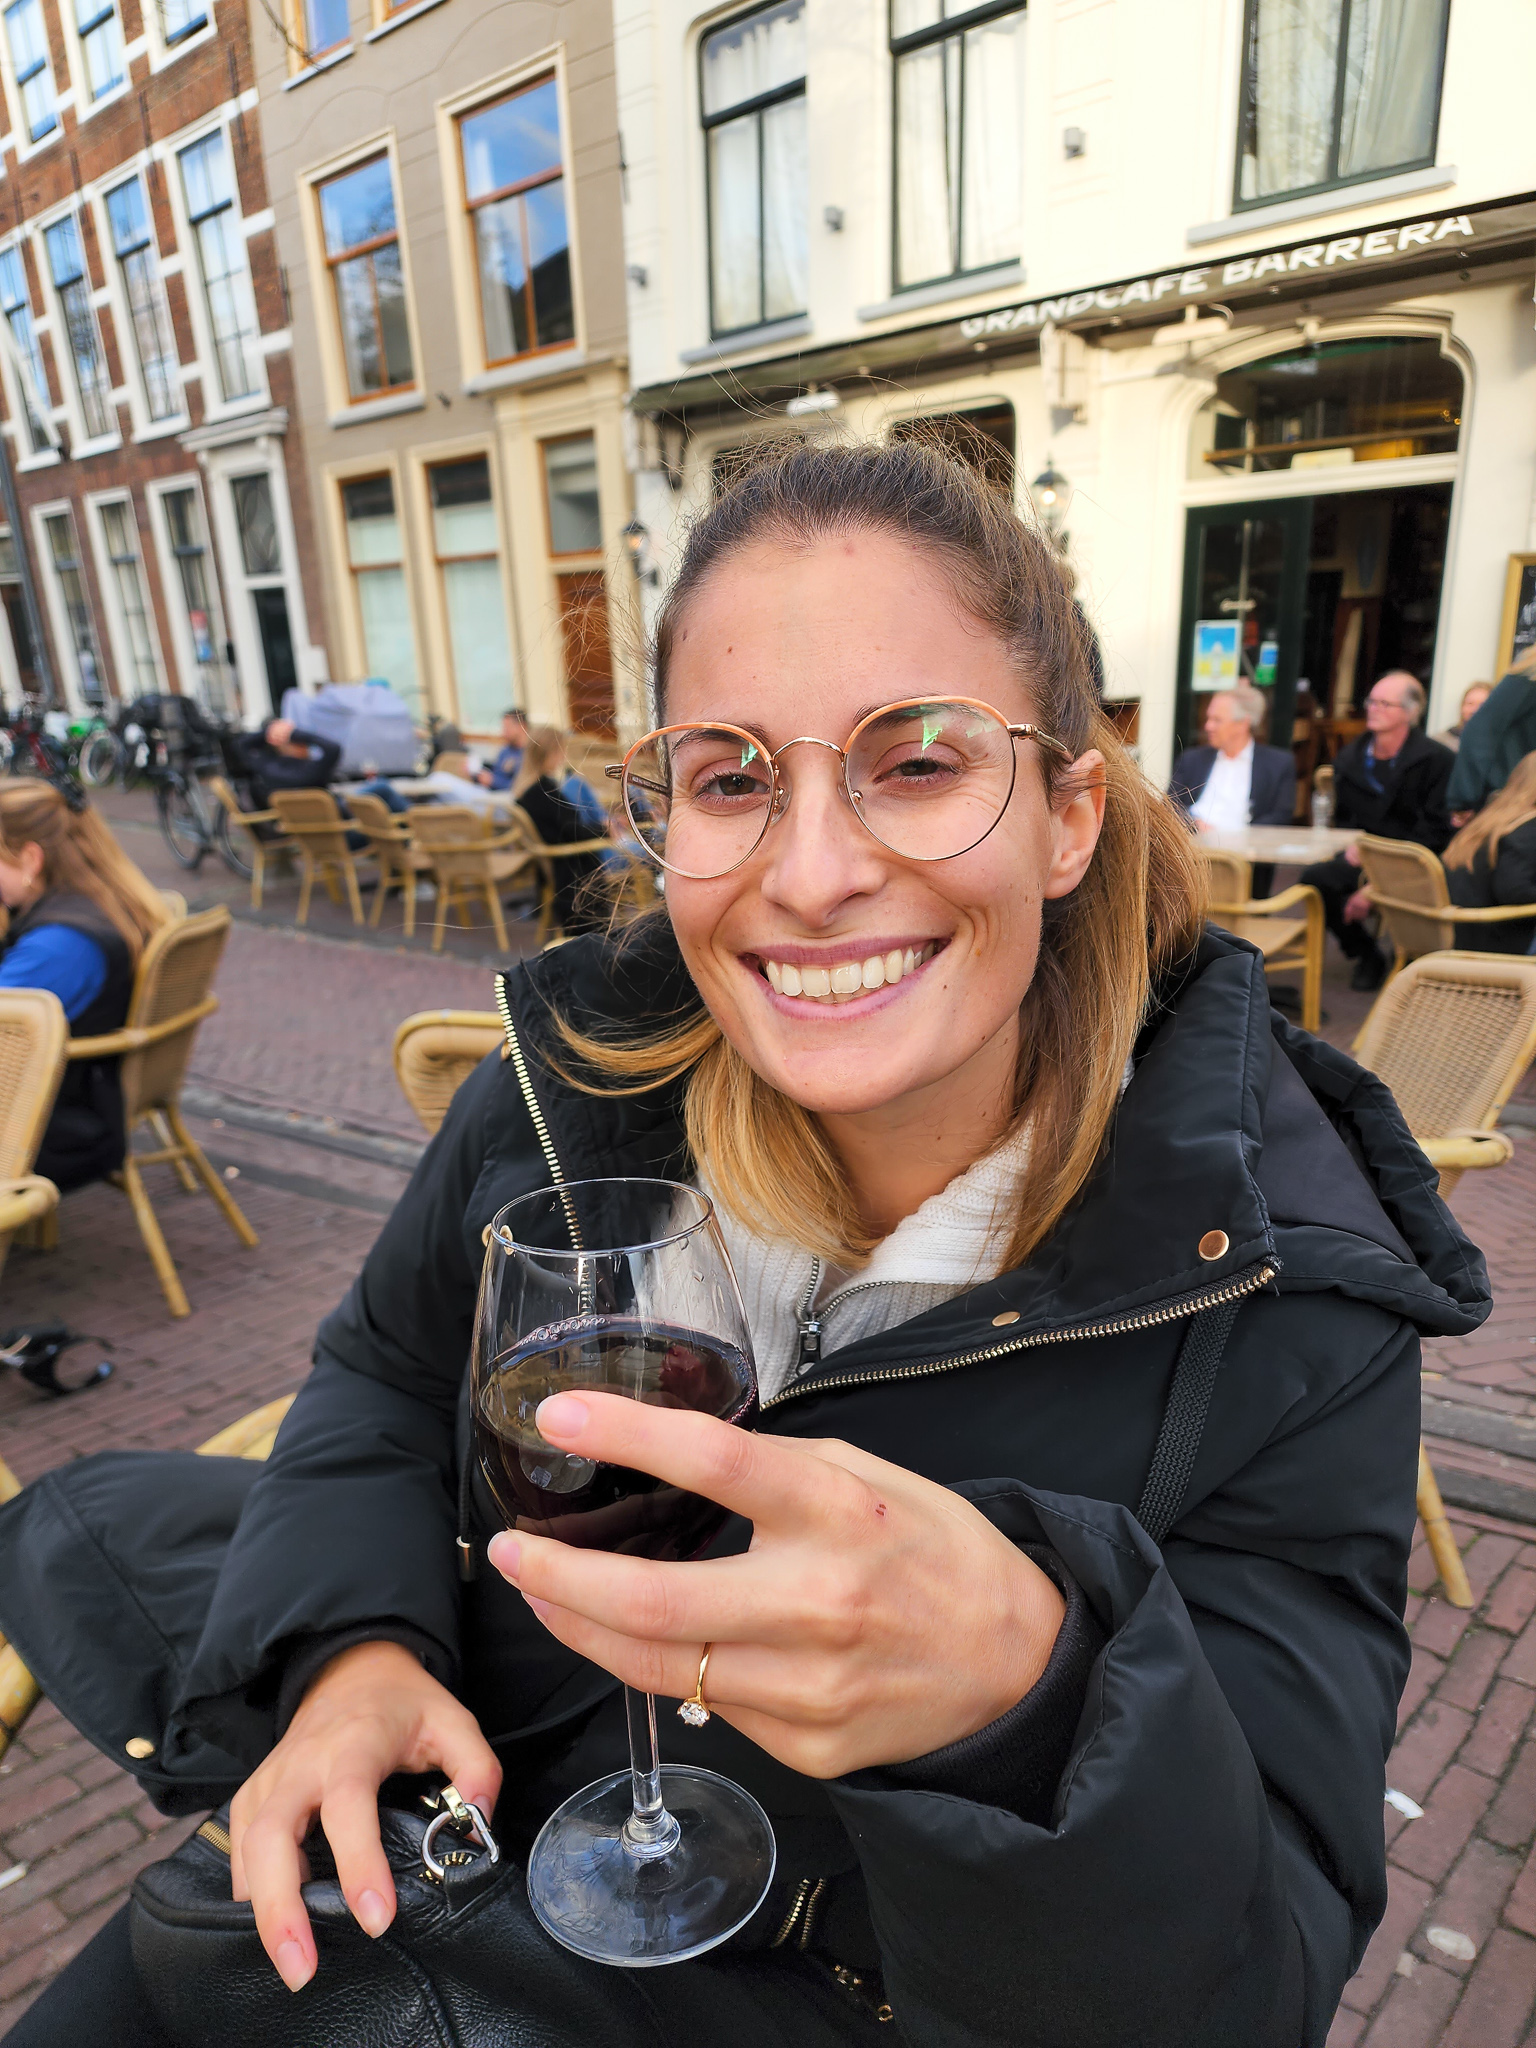 Leiden amsterdam netherlands cafe barrera